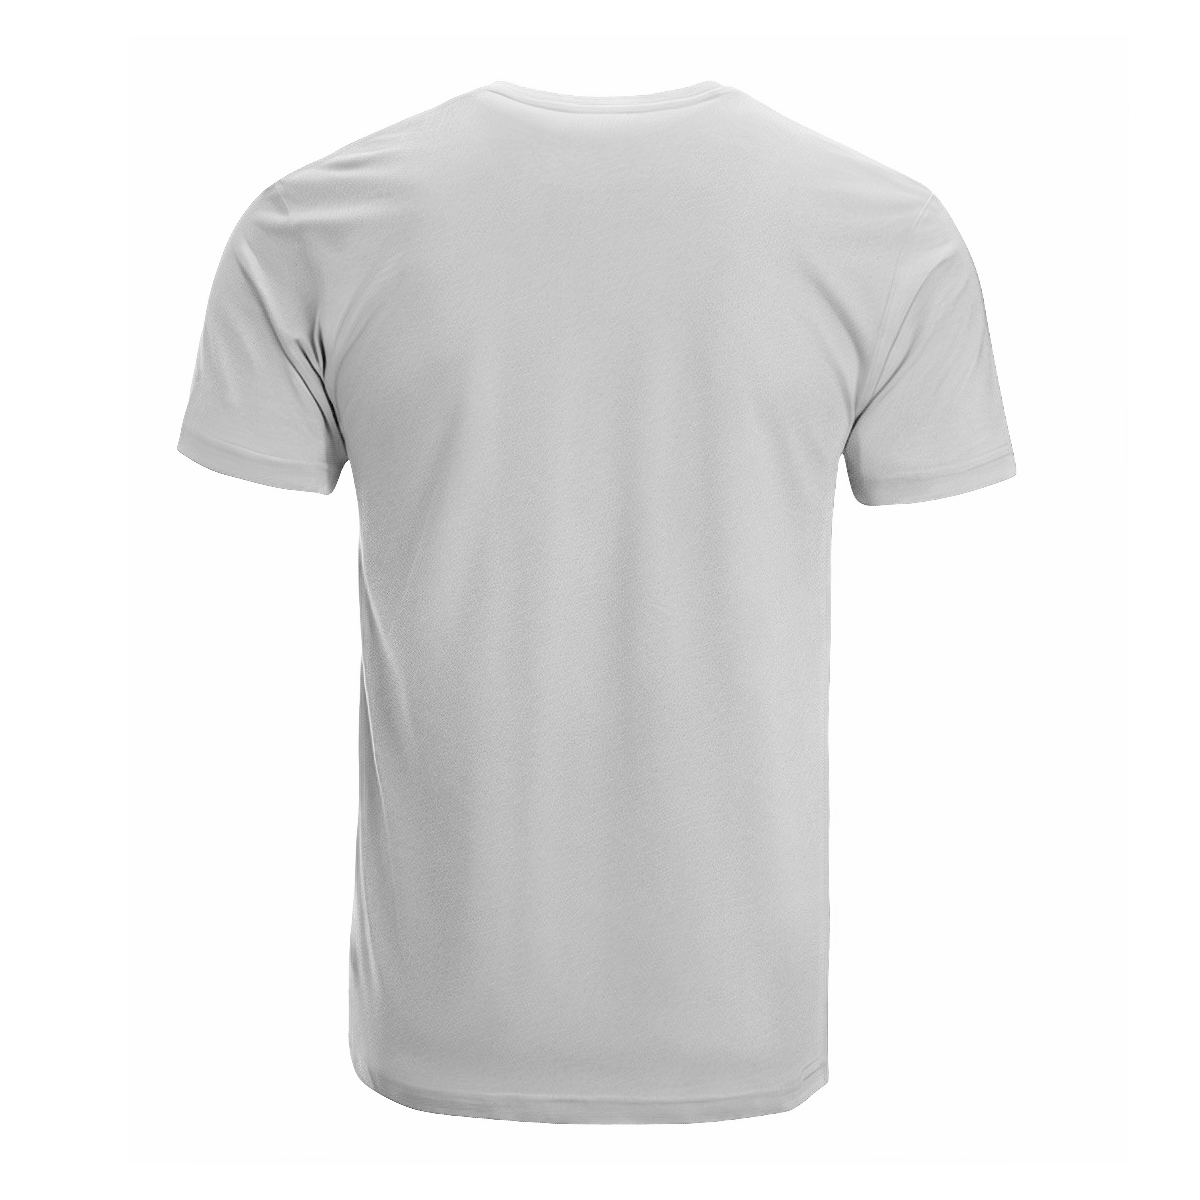 Wallace Tartan Crest T-shirt - I'm not yelling style